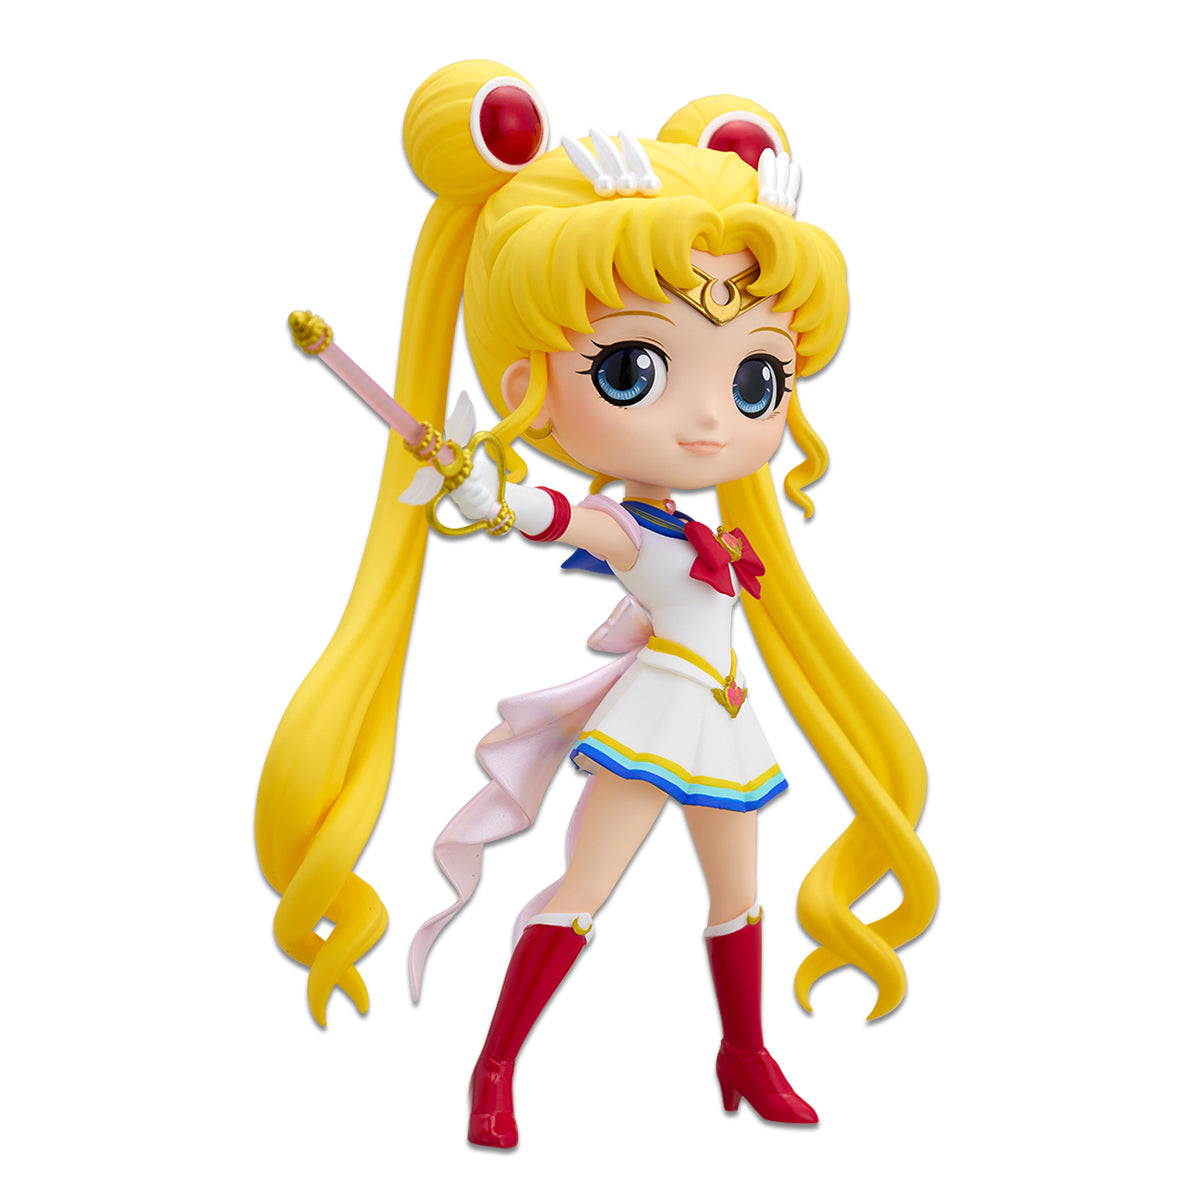 Super Sailor Moon - Kaleidoscope version from Pretty Guardian Sailor Moon Eternal the movie